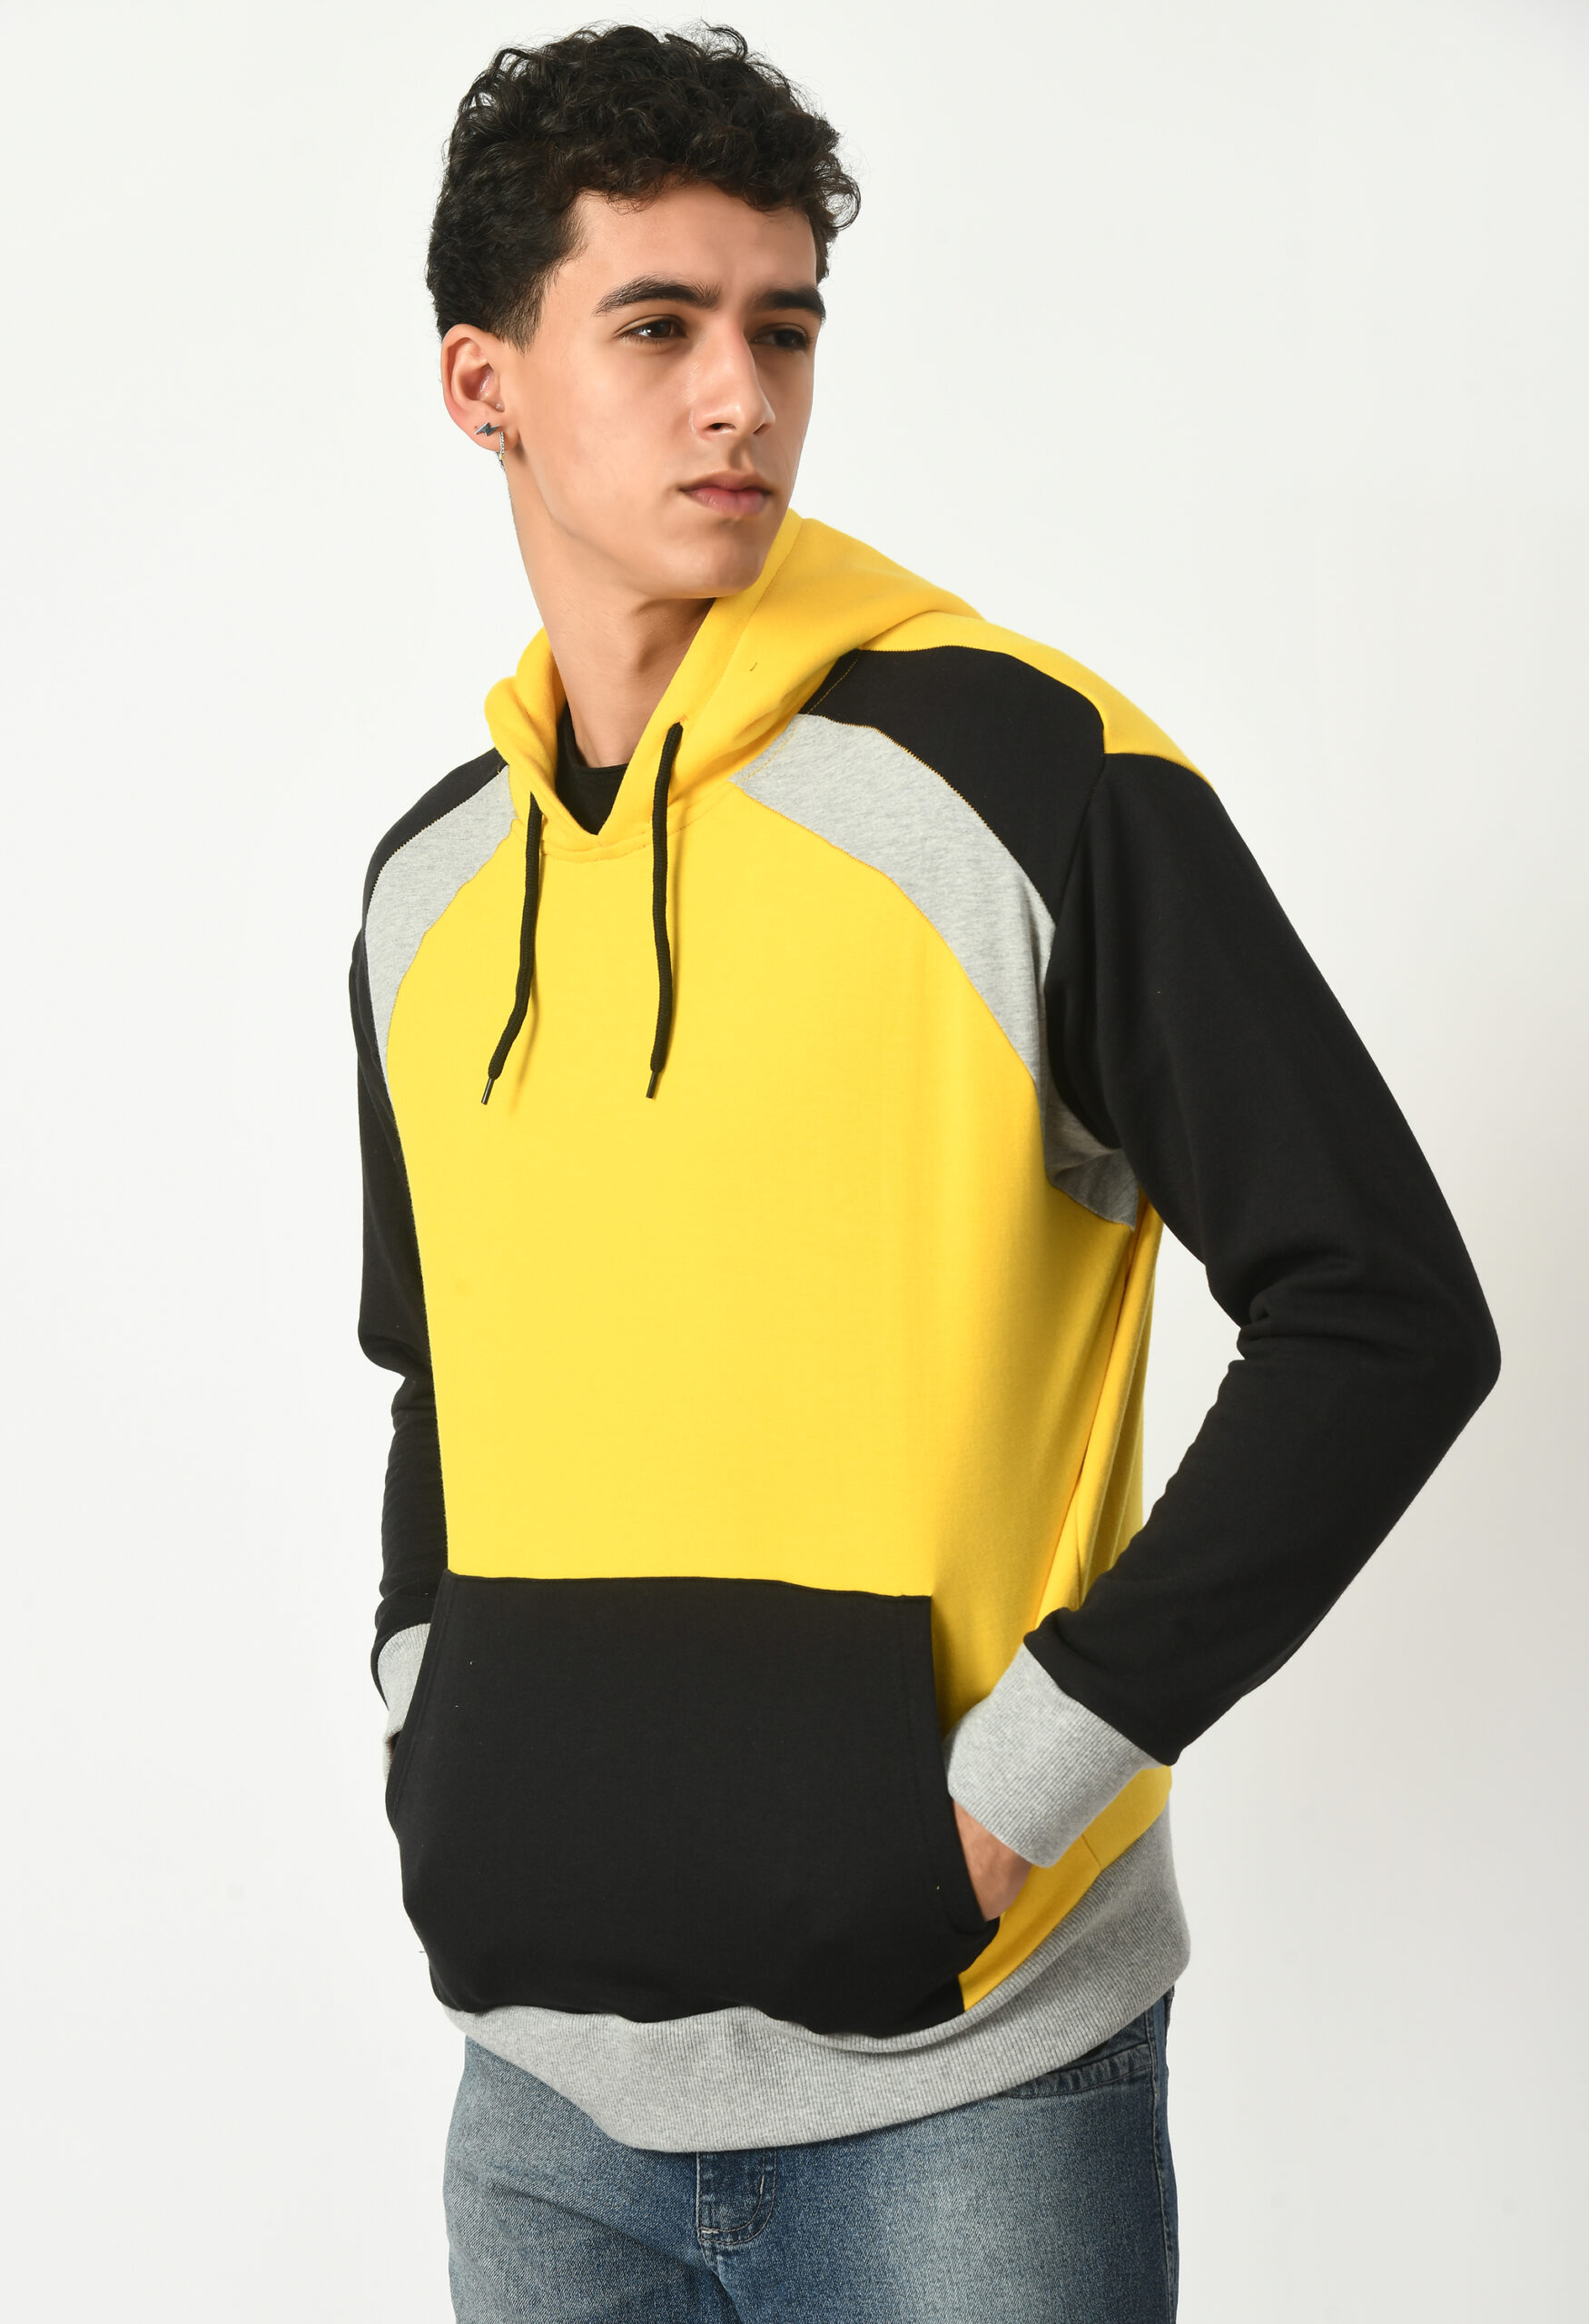 Multi Coloured Hoodies for Men - Yellow & Black 3